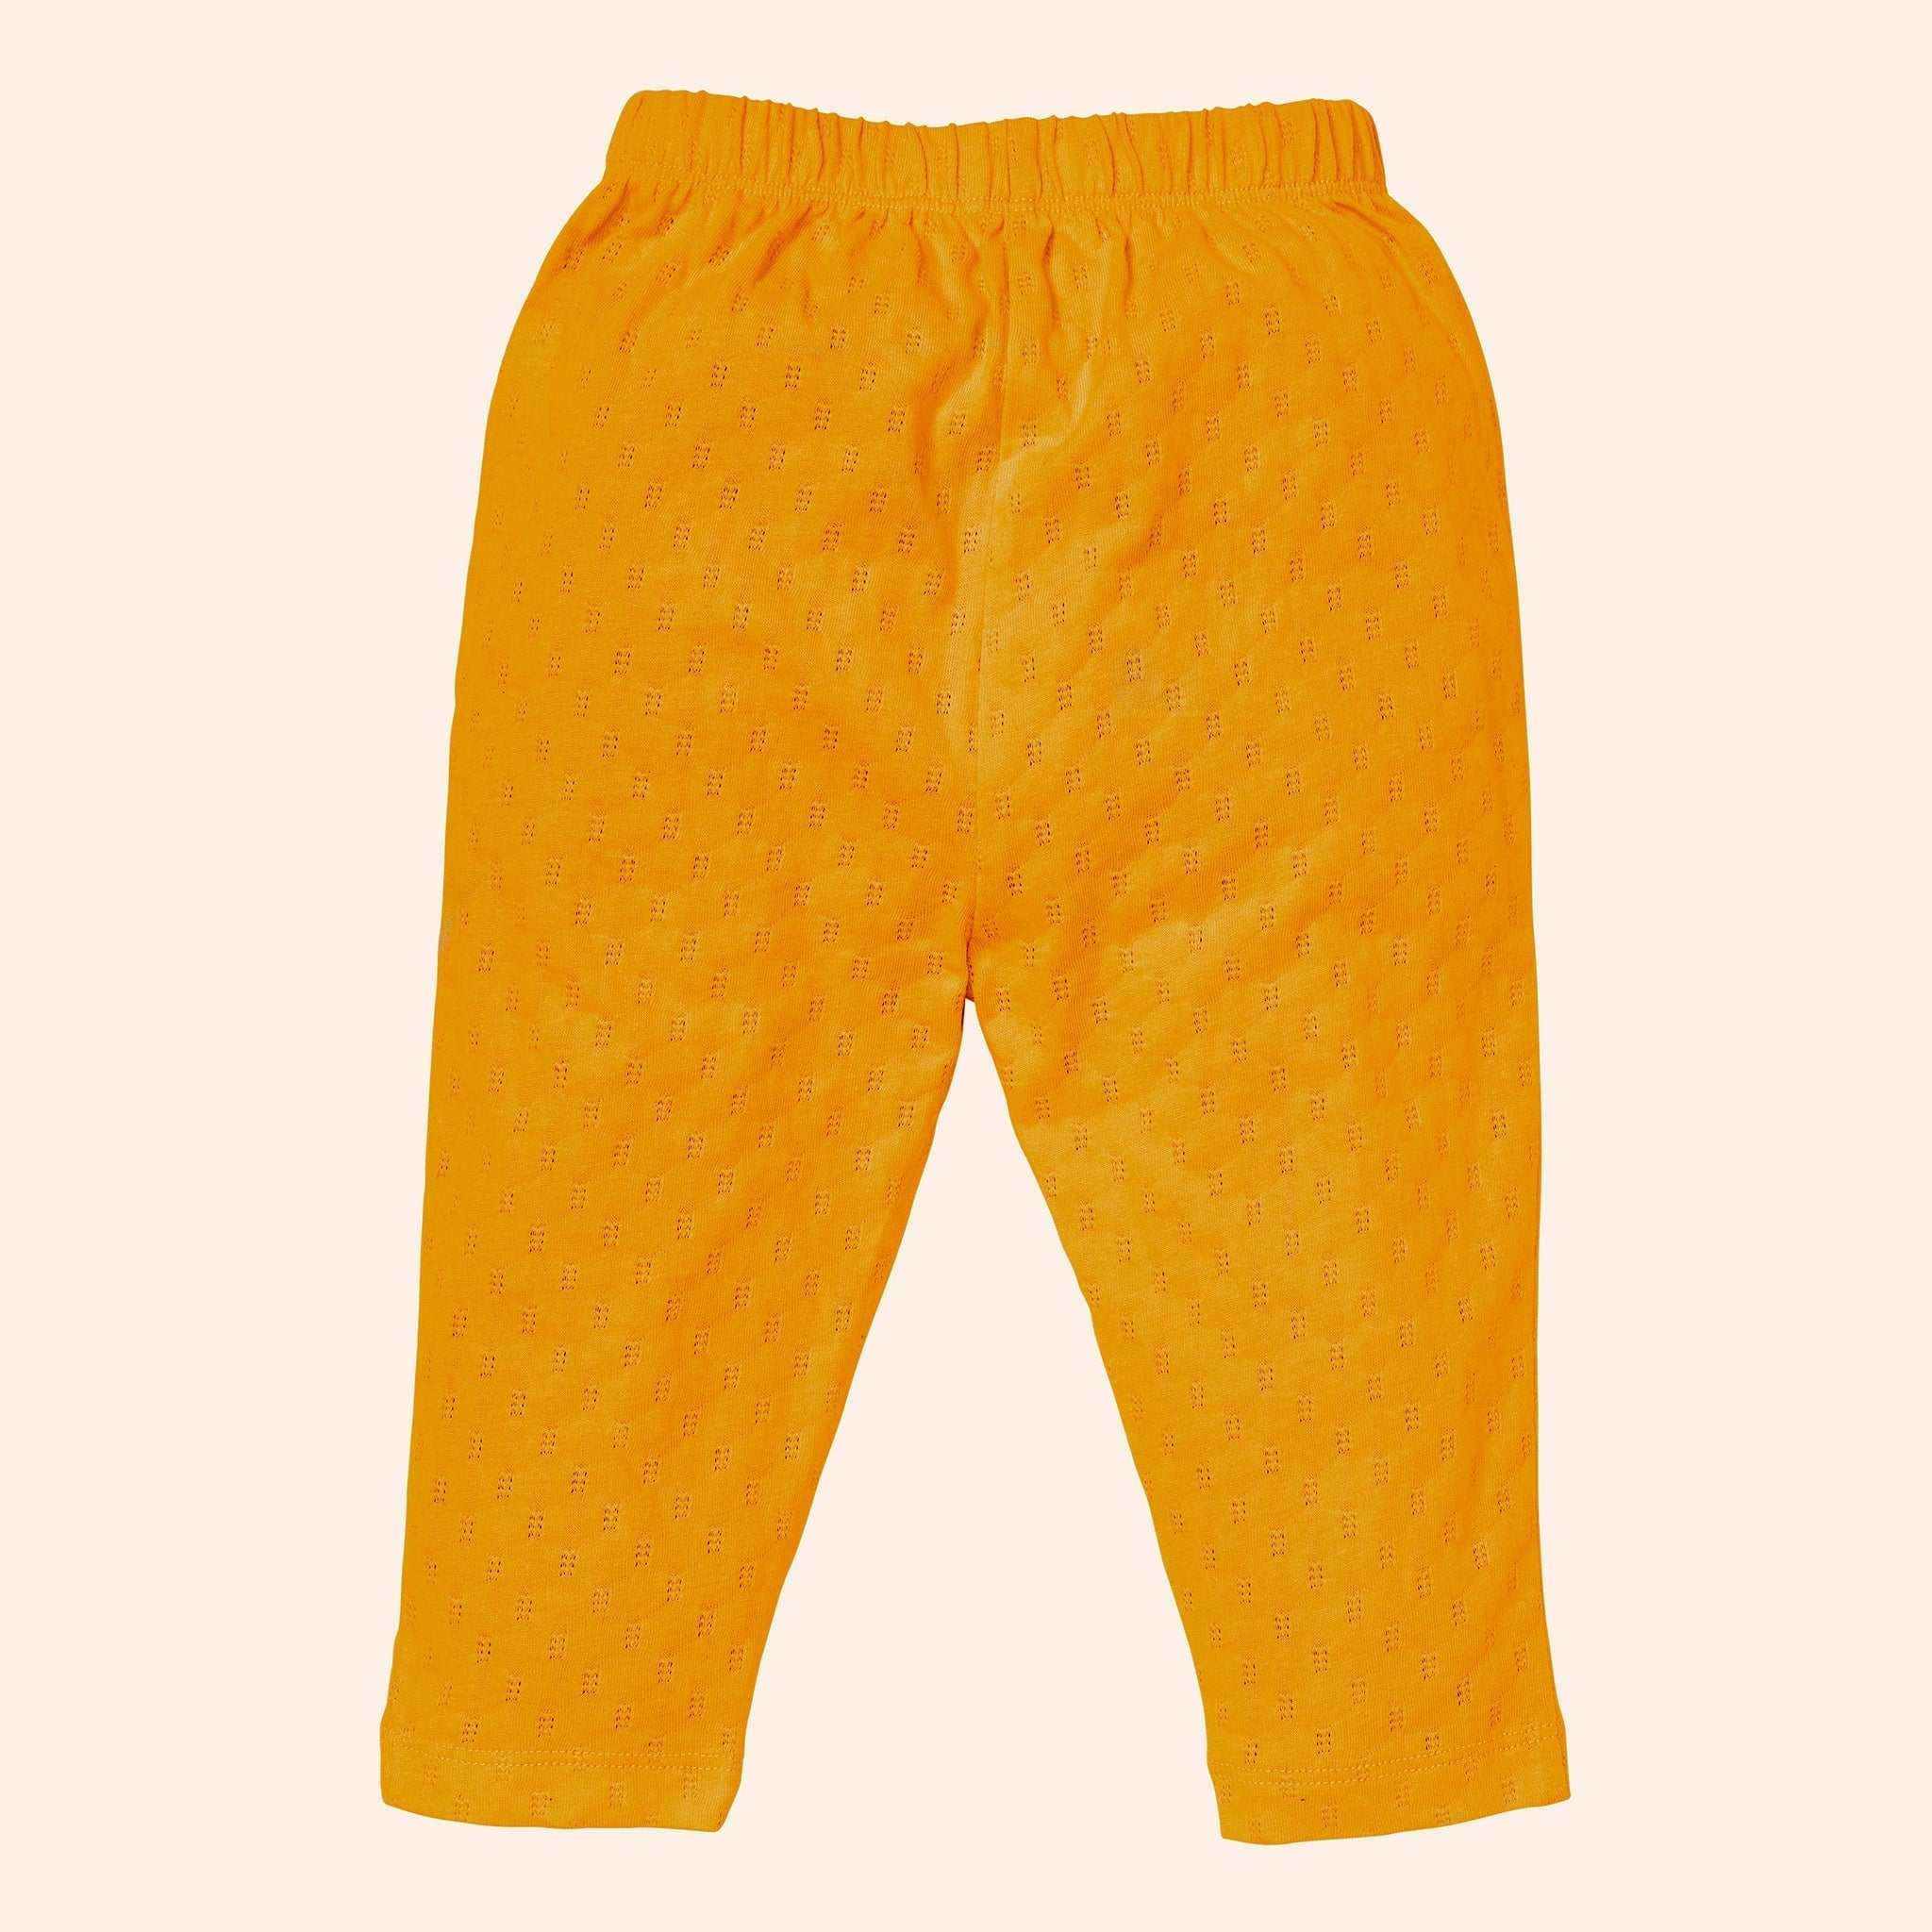 Provo Pant (Golden Orange)